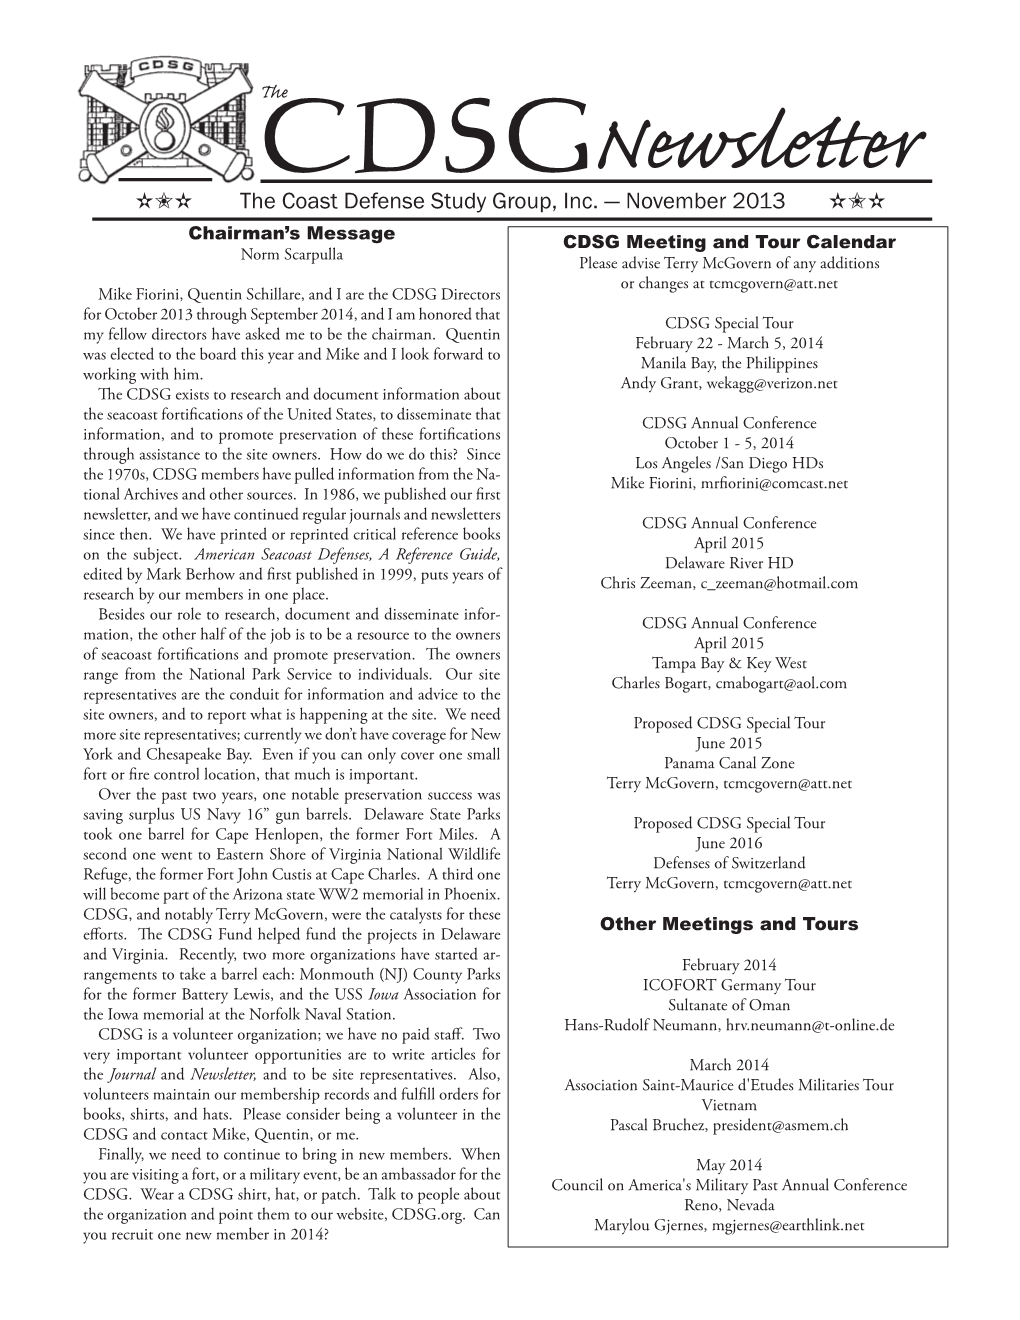 CDSG Newsletter, November 2013 Page 2 May 2014 February 2014 Czech Association for Military History Tour ECCOFORT Reg